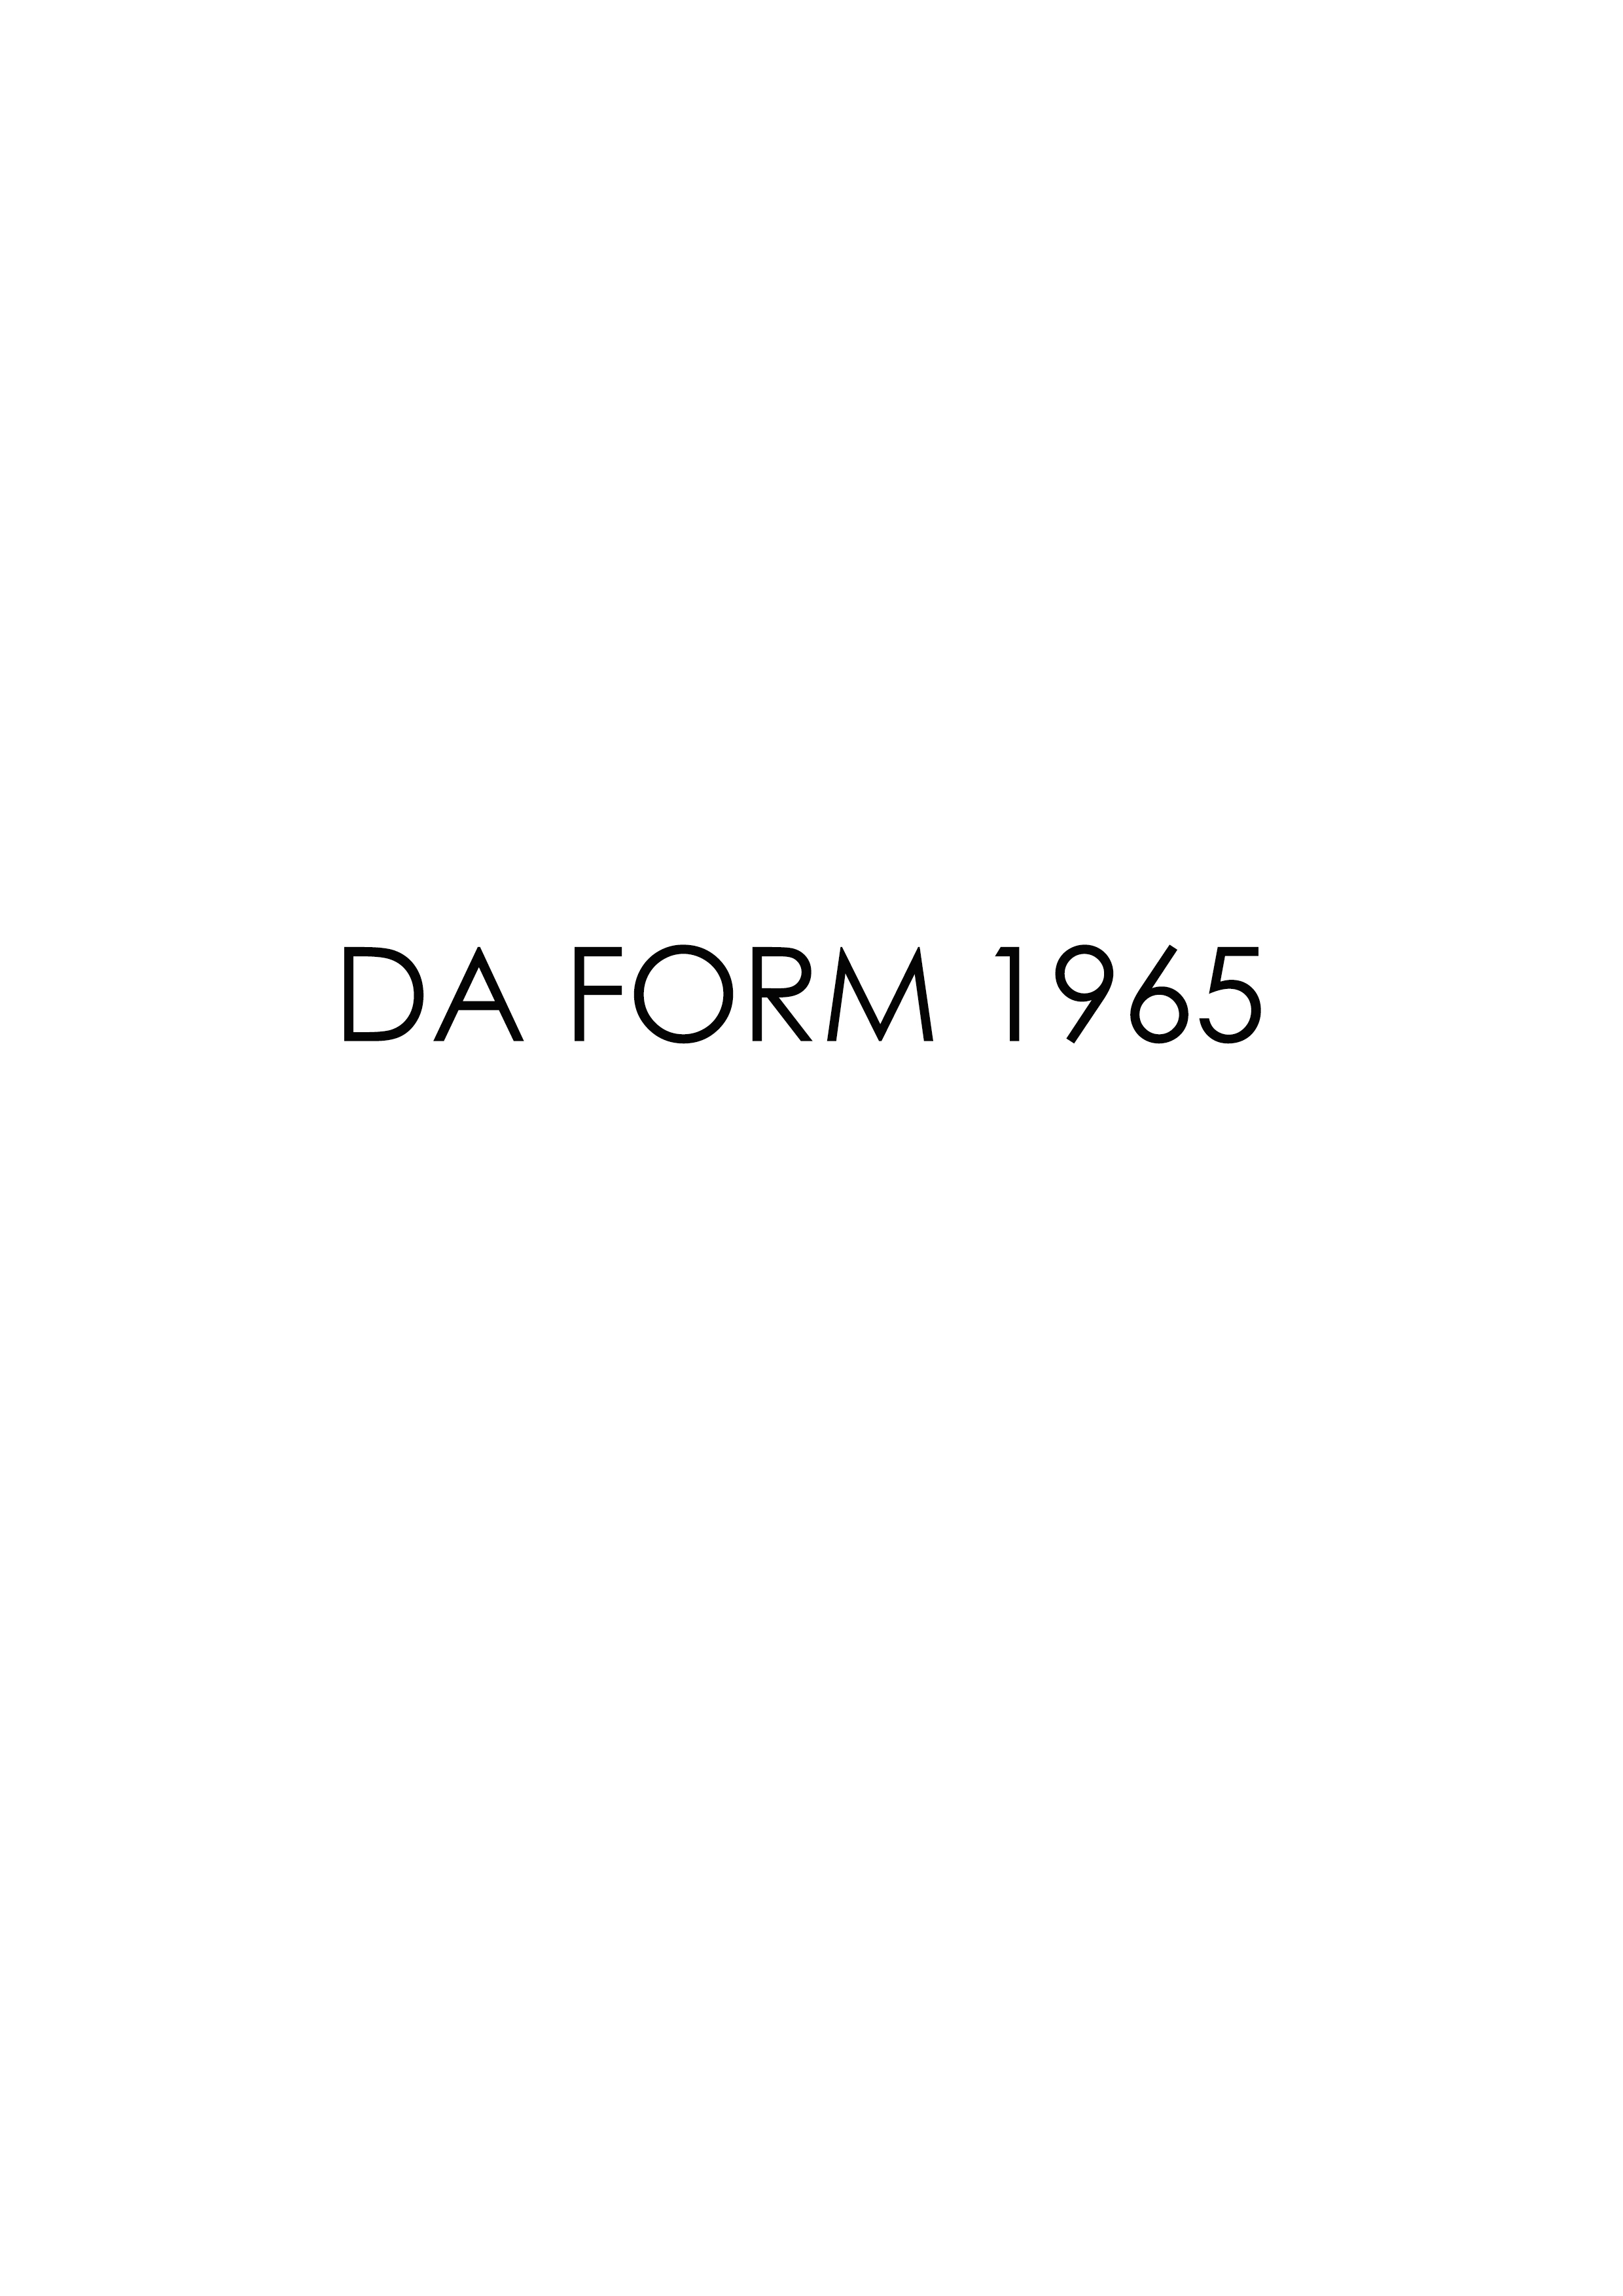 da Form 1965 fillable